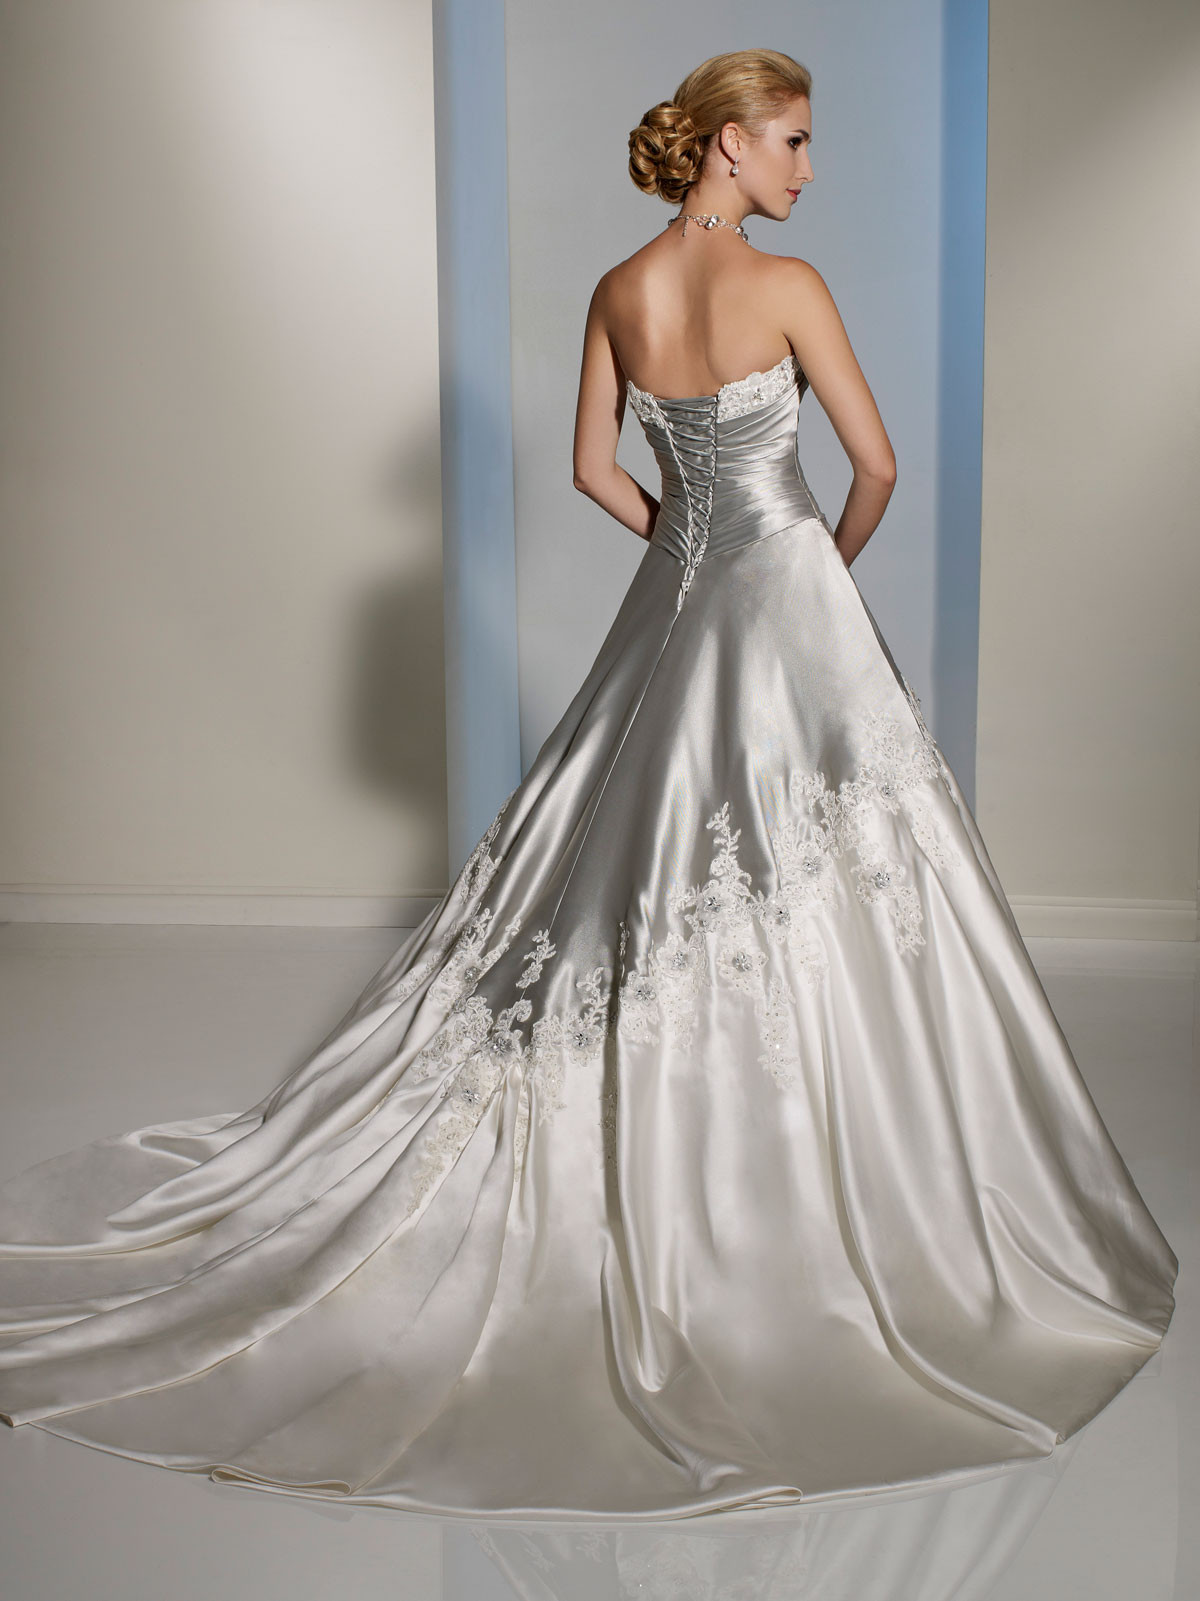 Silver Wedding Dress
 Silver and white draped bodice wedding dress